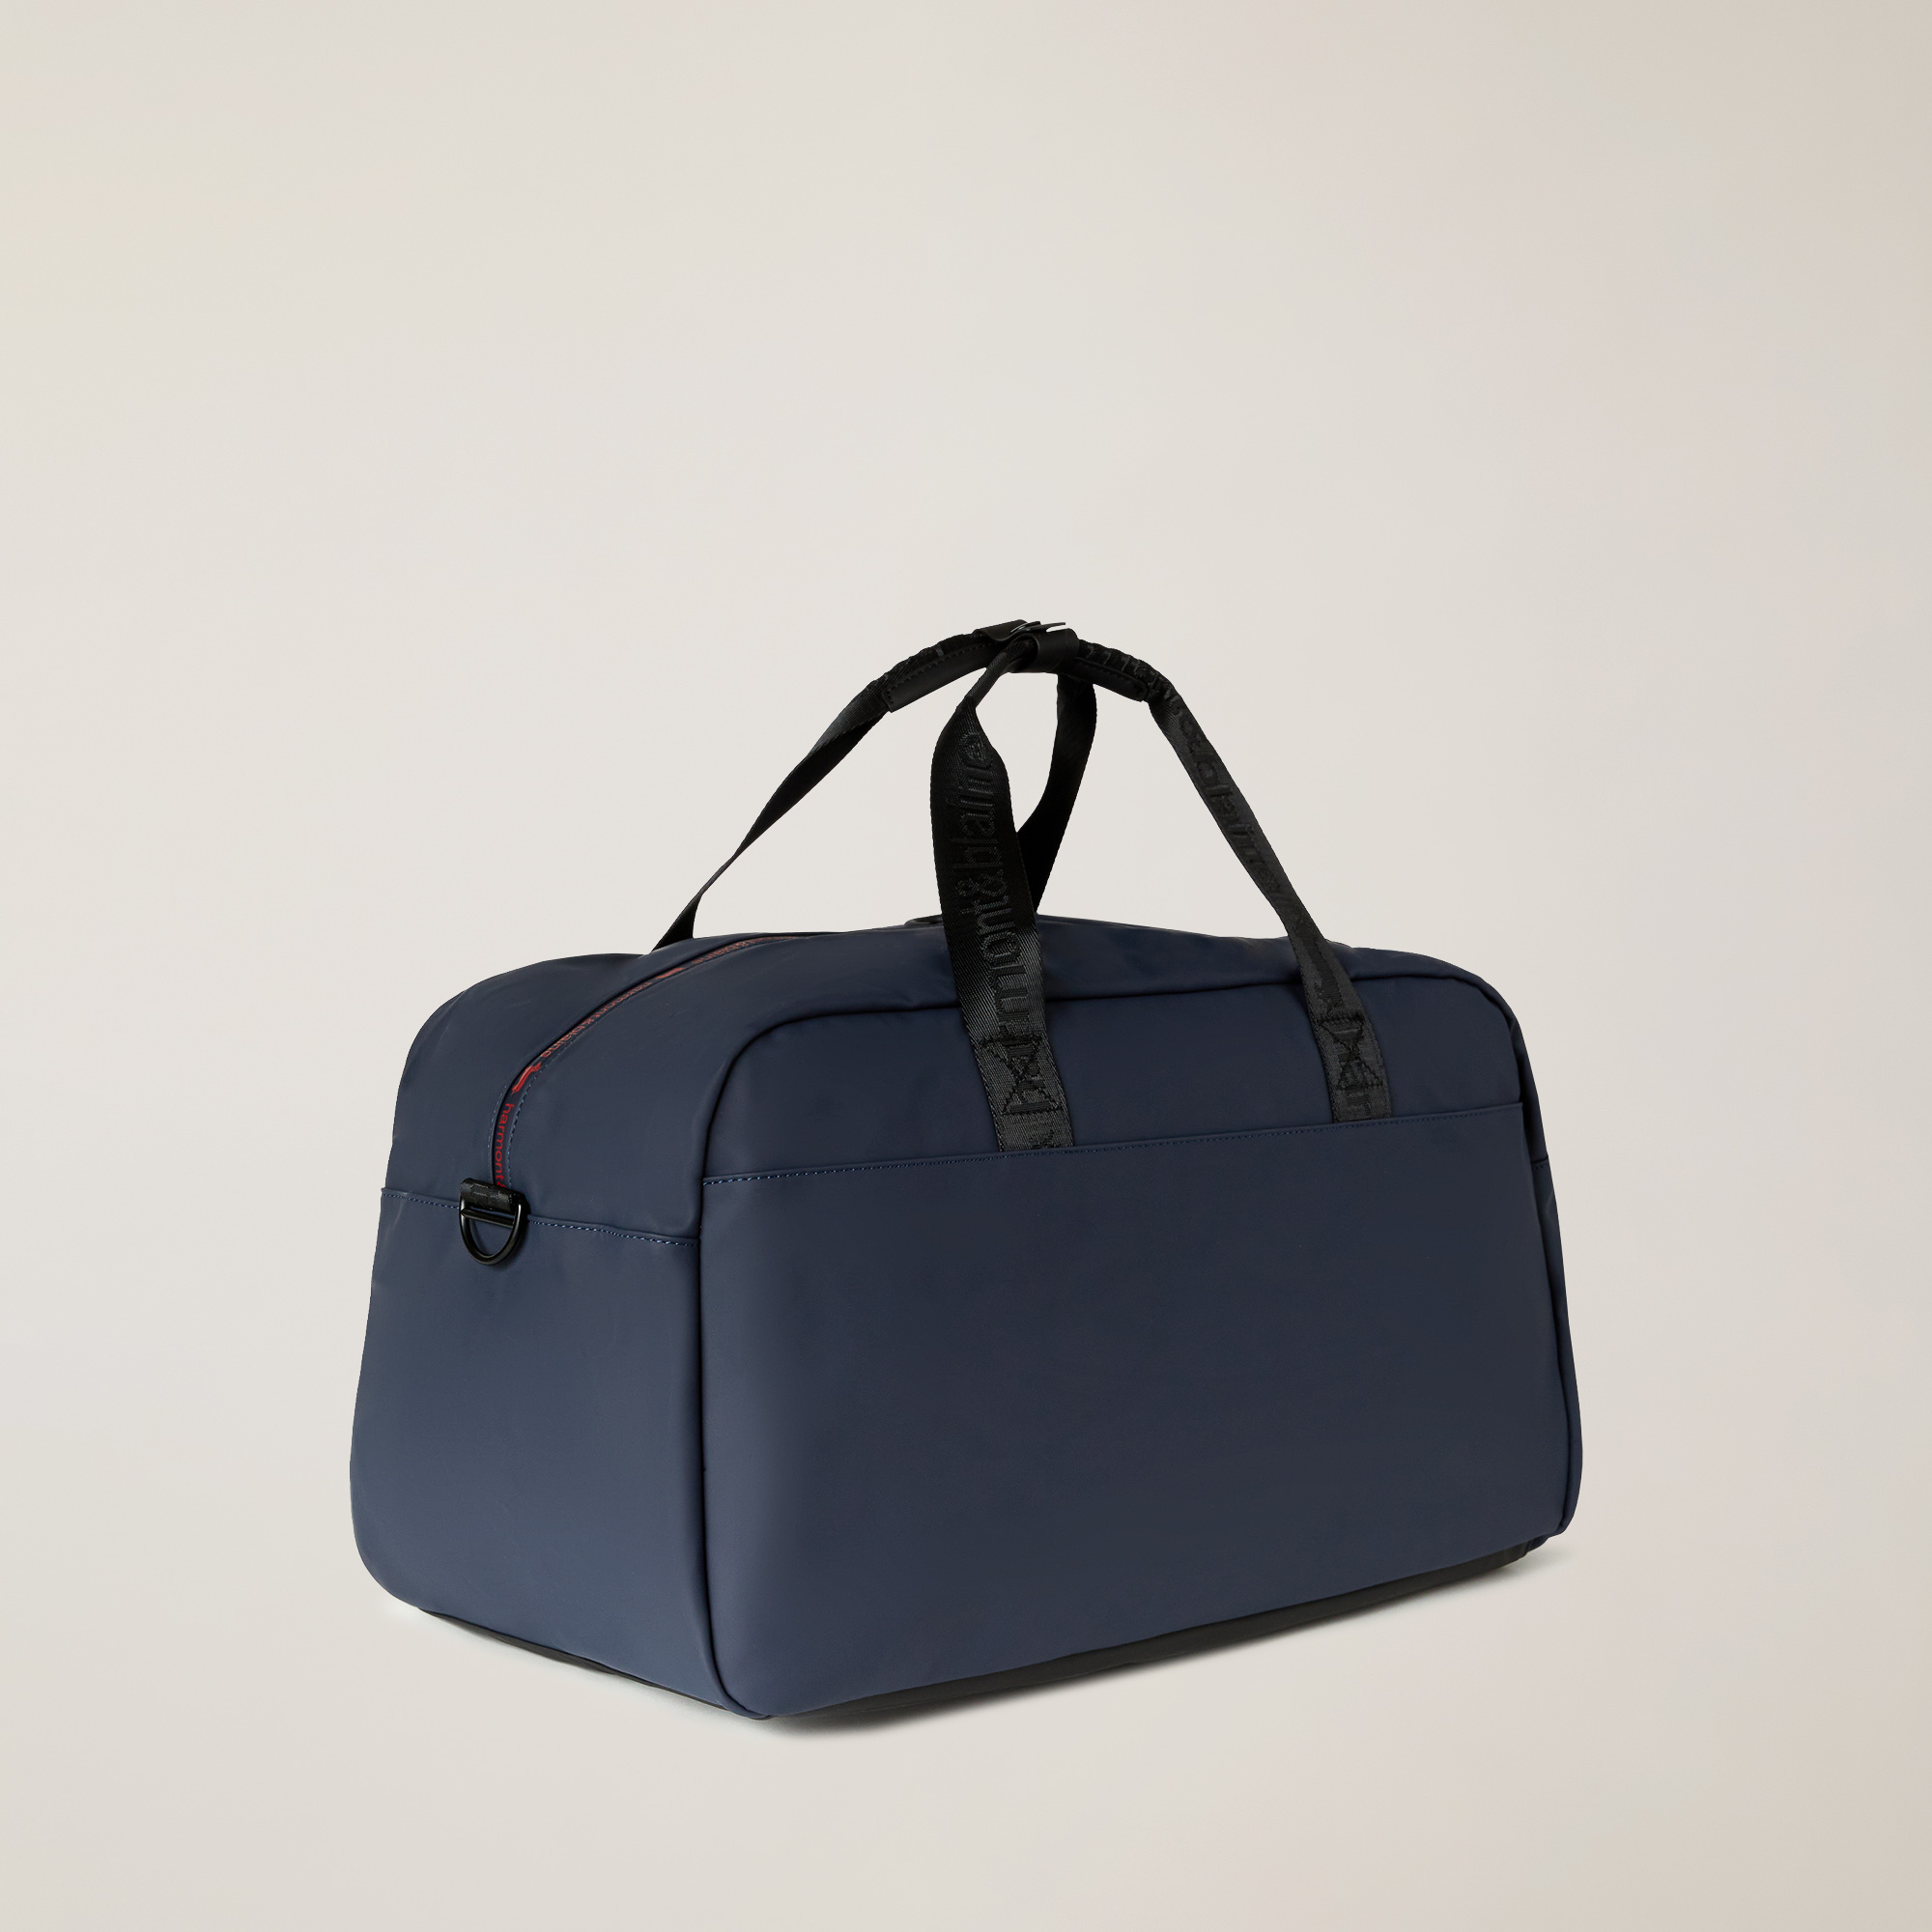 Duffel Bag With Branded Details, Blue, large image number 1